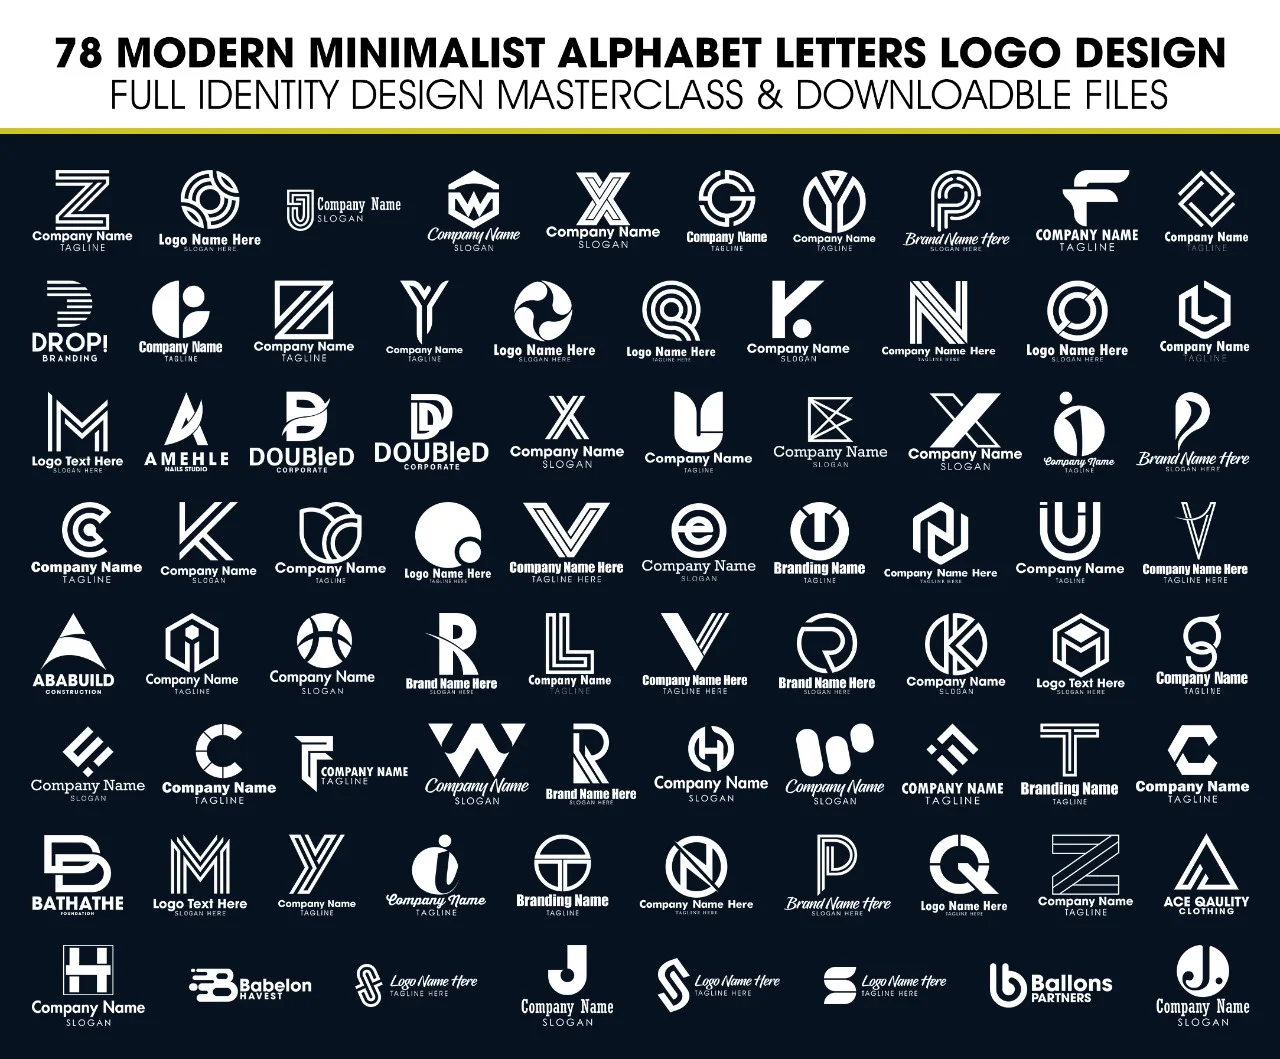 Features Top 78 Modern Minimalist Letters Minimal Logo Design Espere Camino with Warten Weg